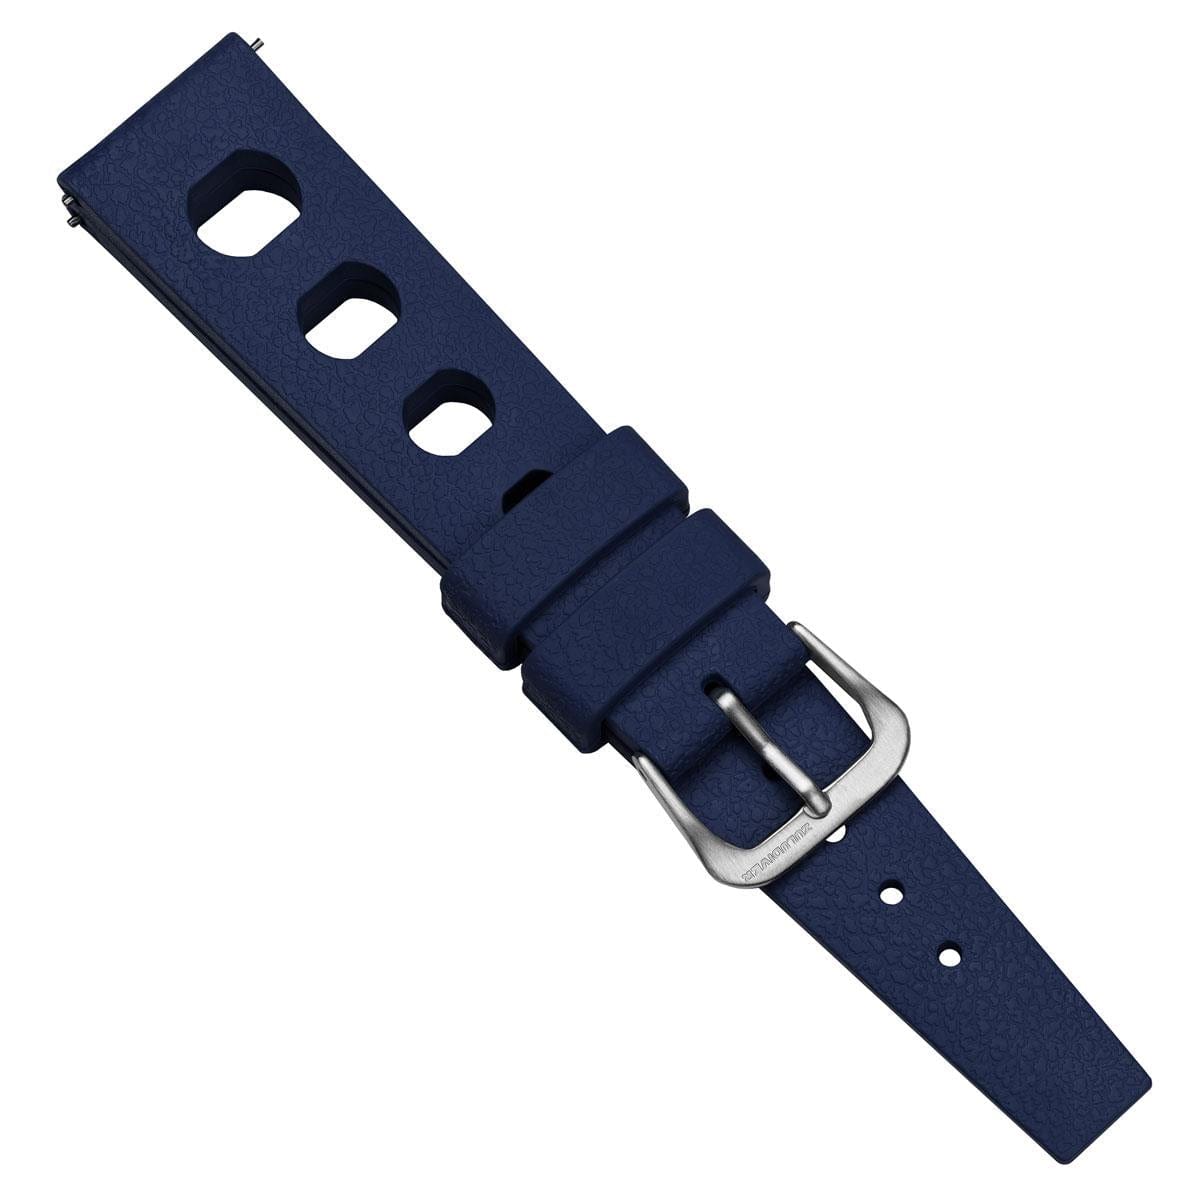 ZULUDIVER Tropical Regis Rubber Watch Strap - Blue